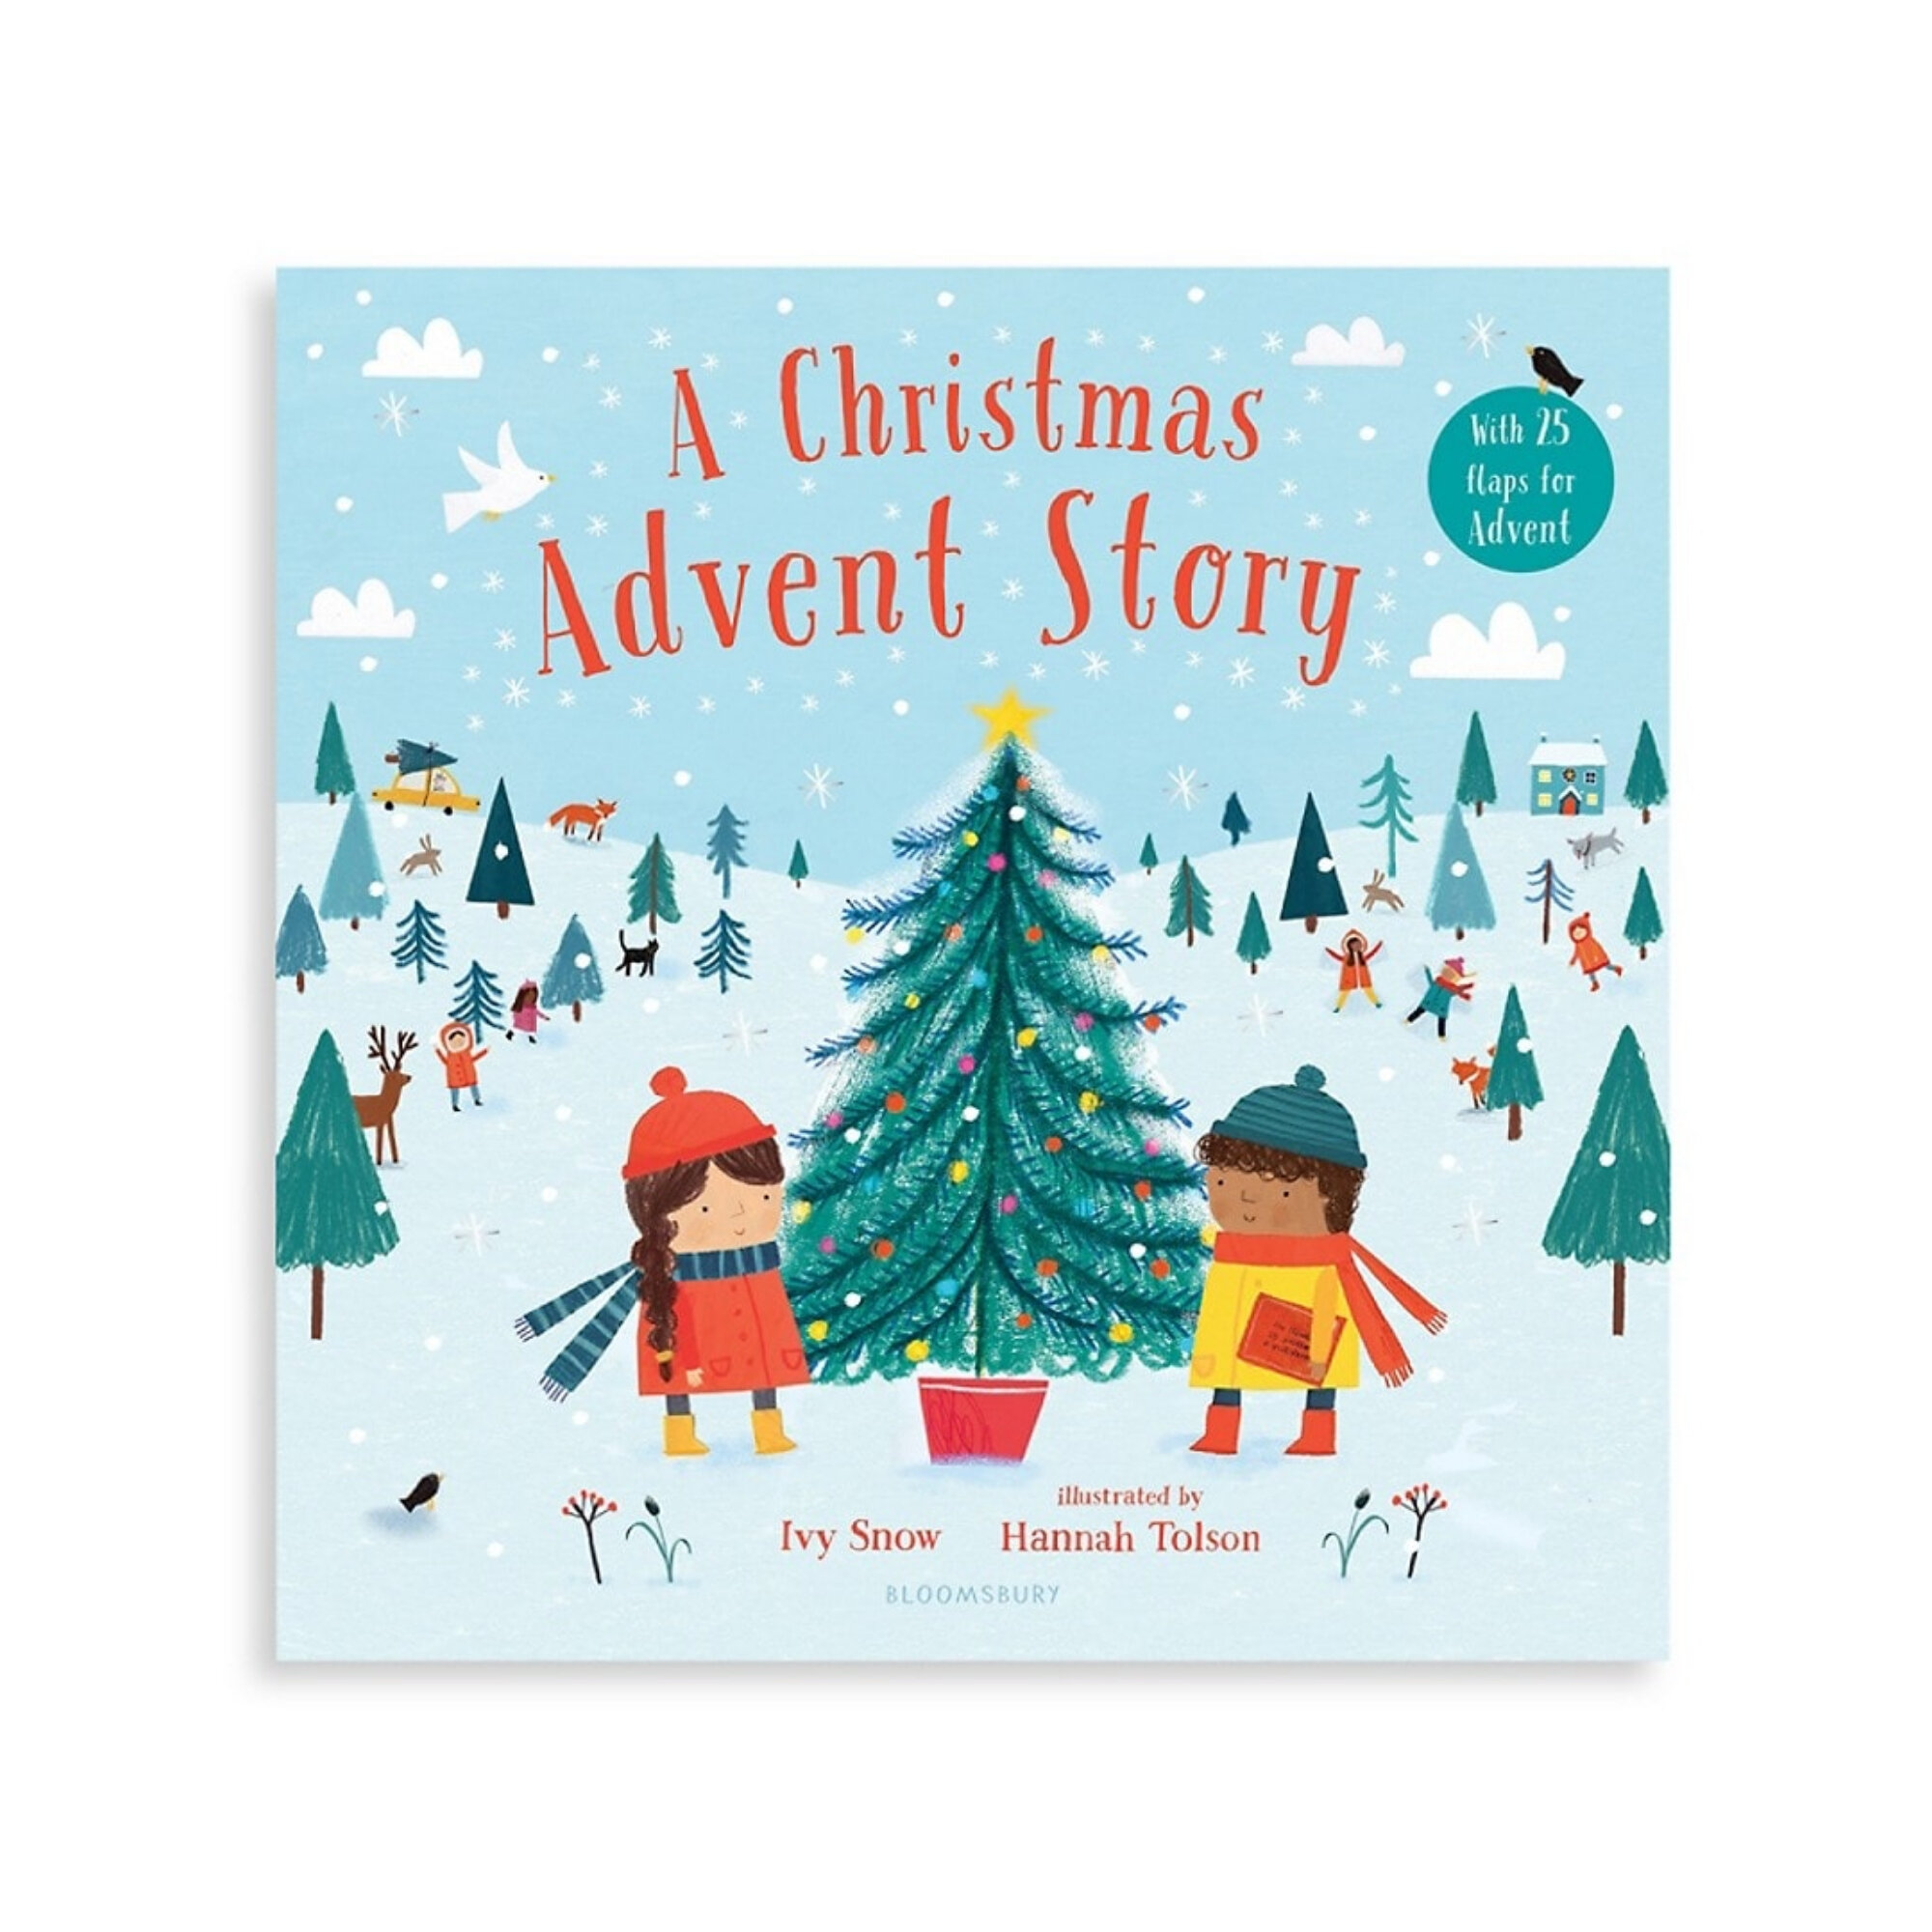 A Christmas Advent Story Book, $15